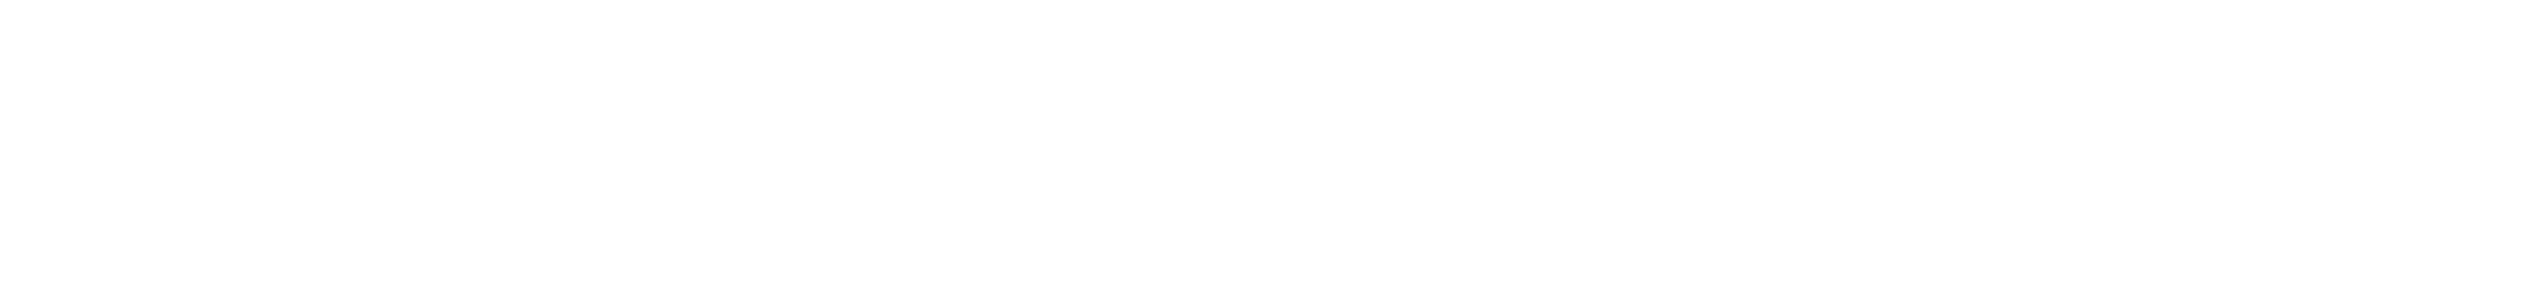 Ninja Network logo